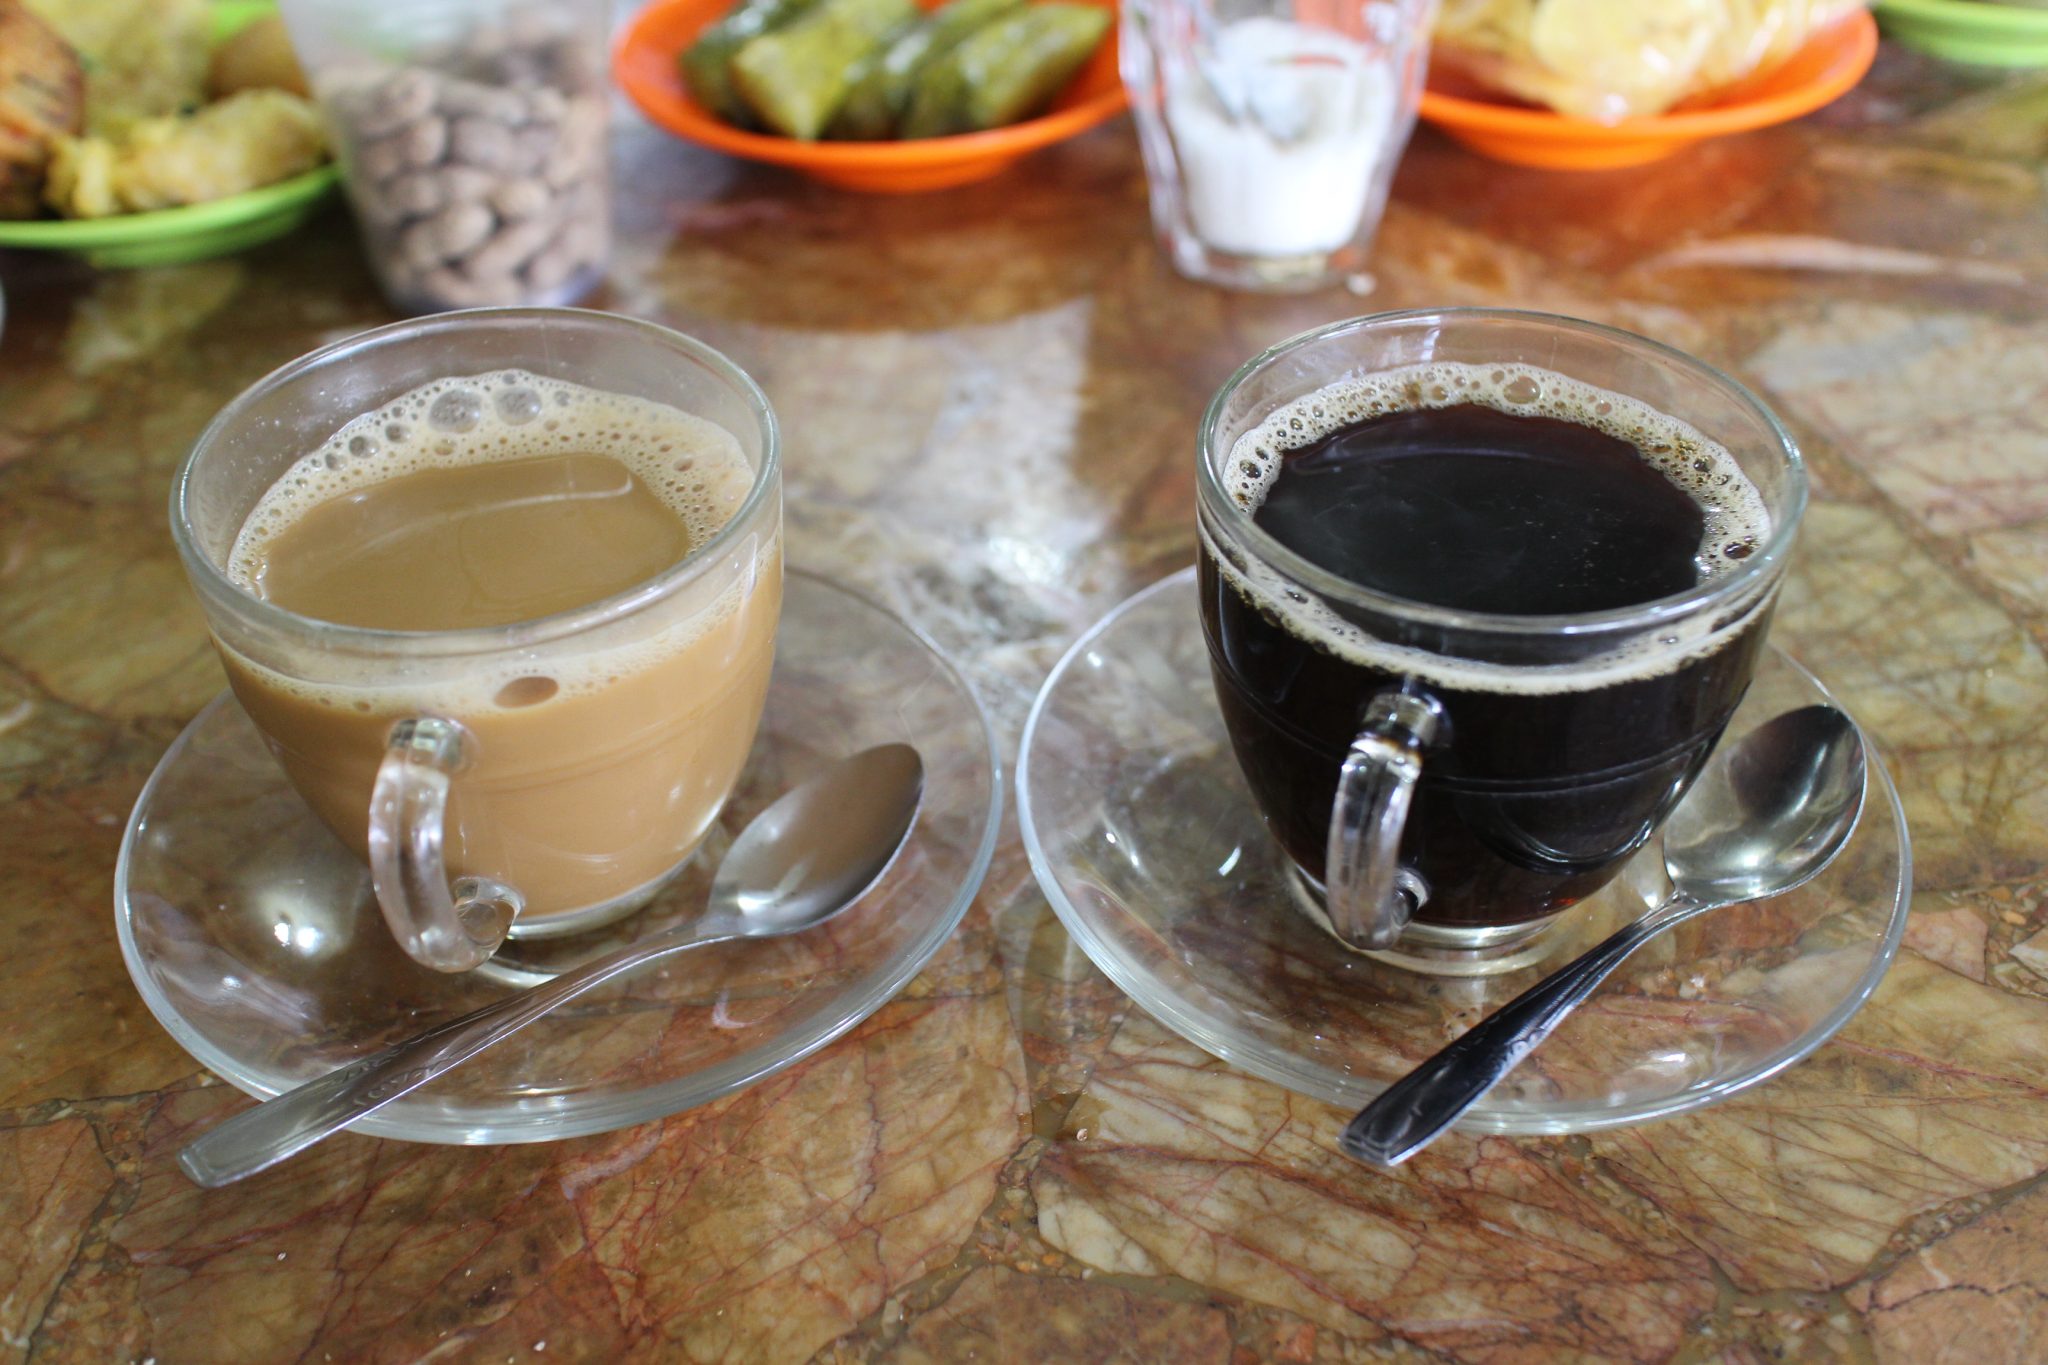 Warung Kopi Tiger - Coffee Shop Recommend!